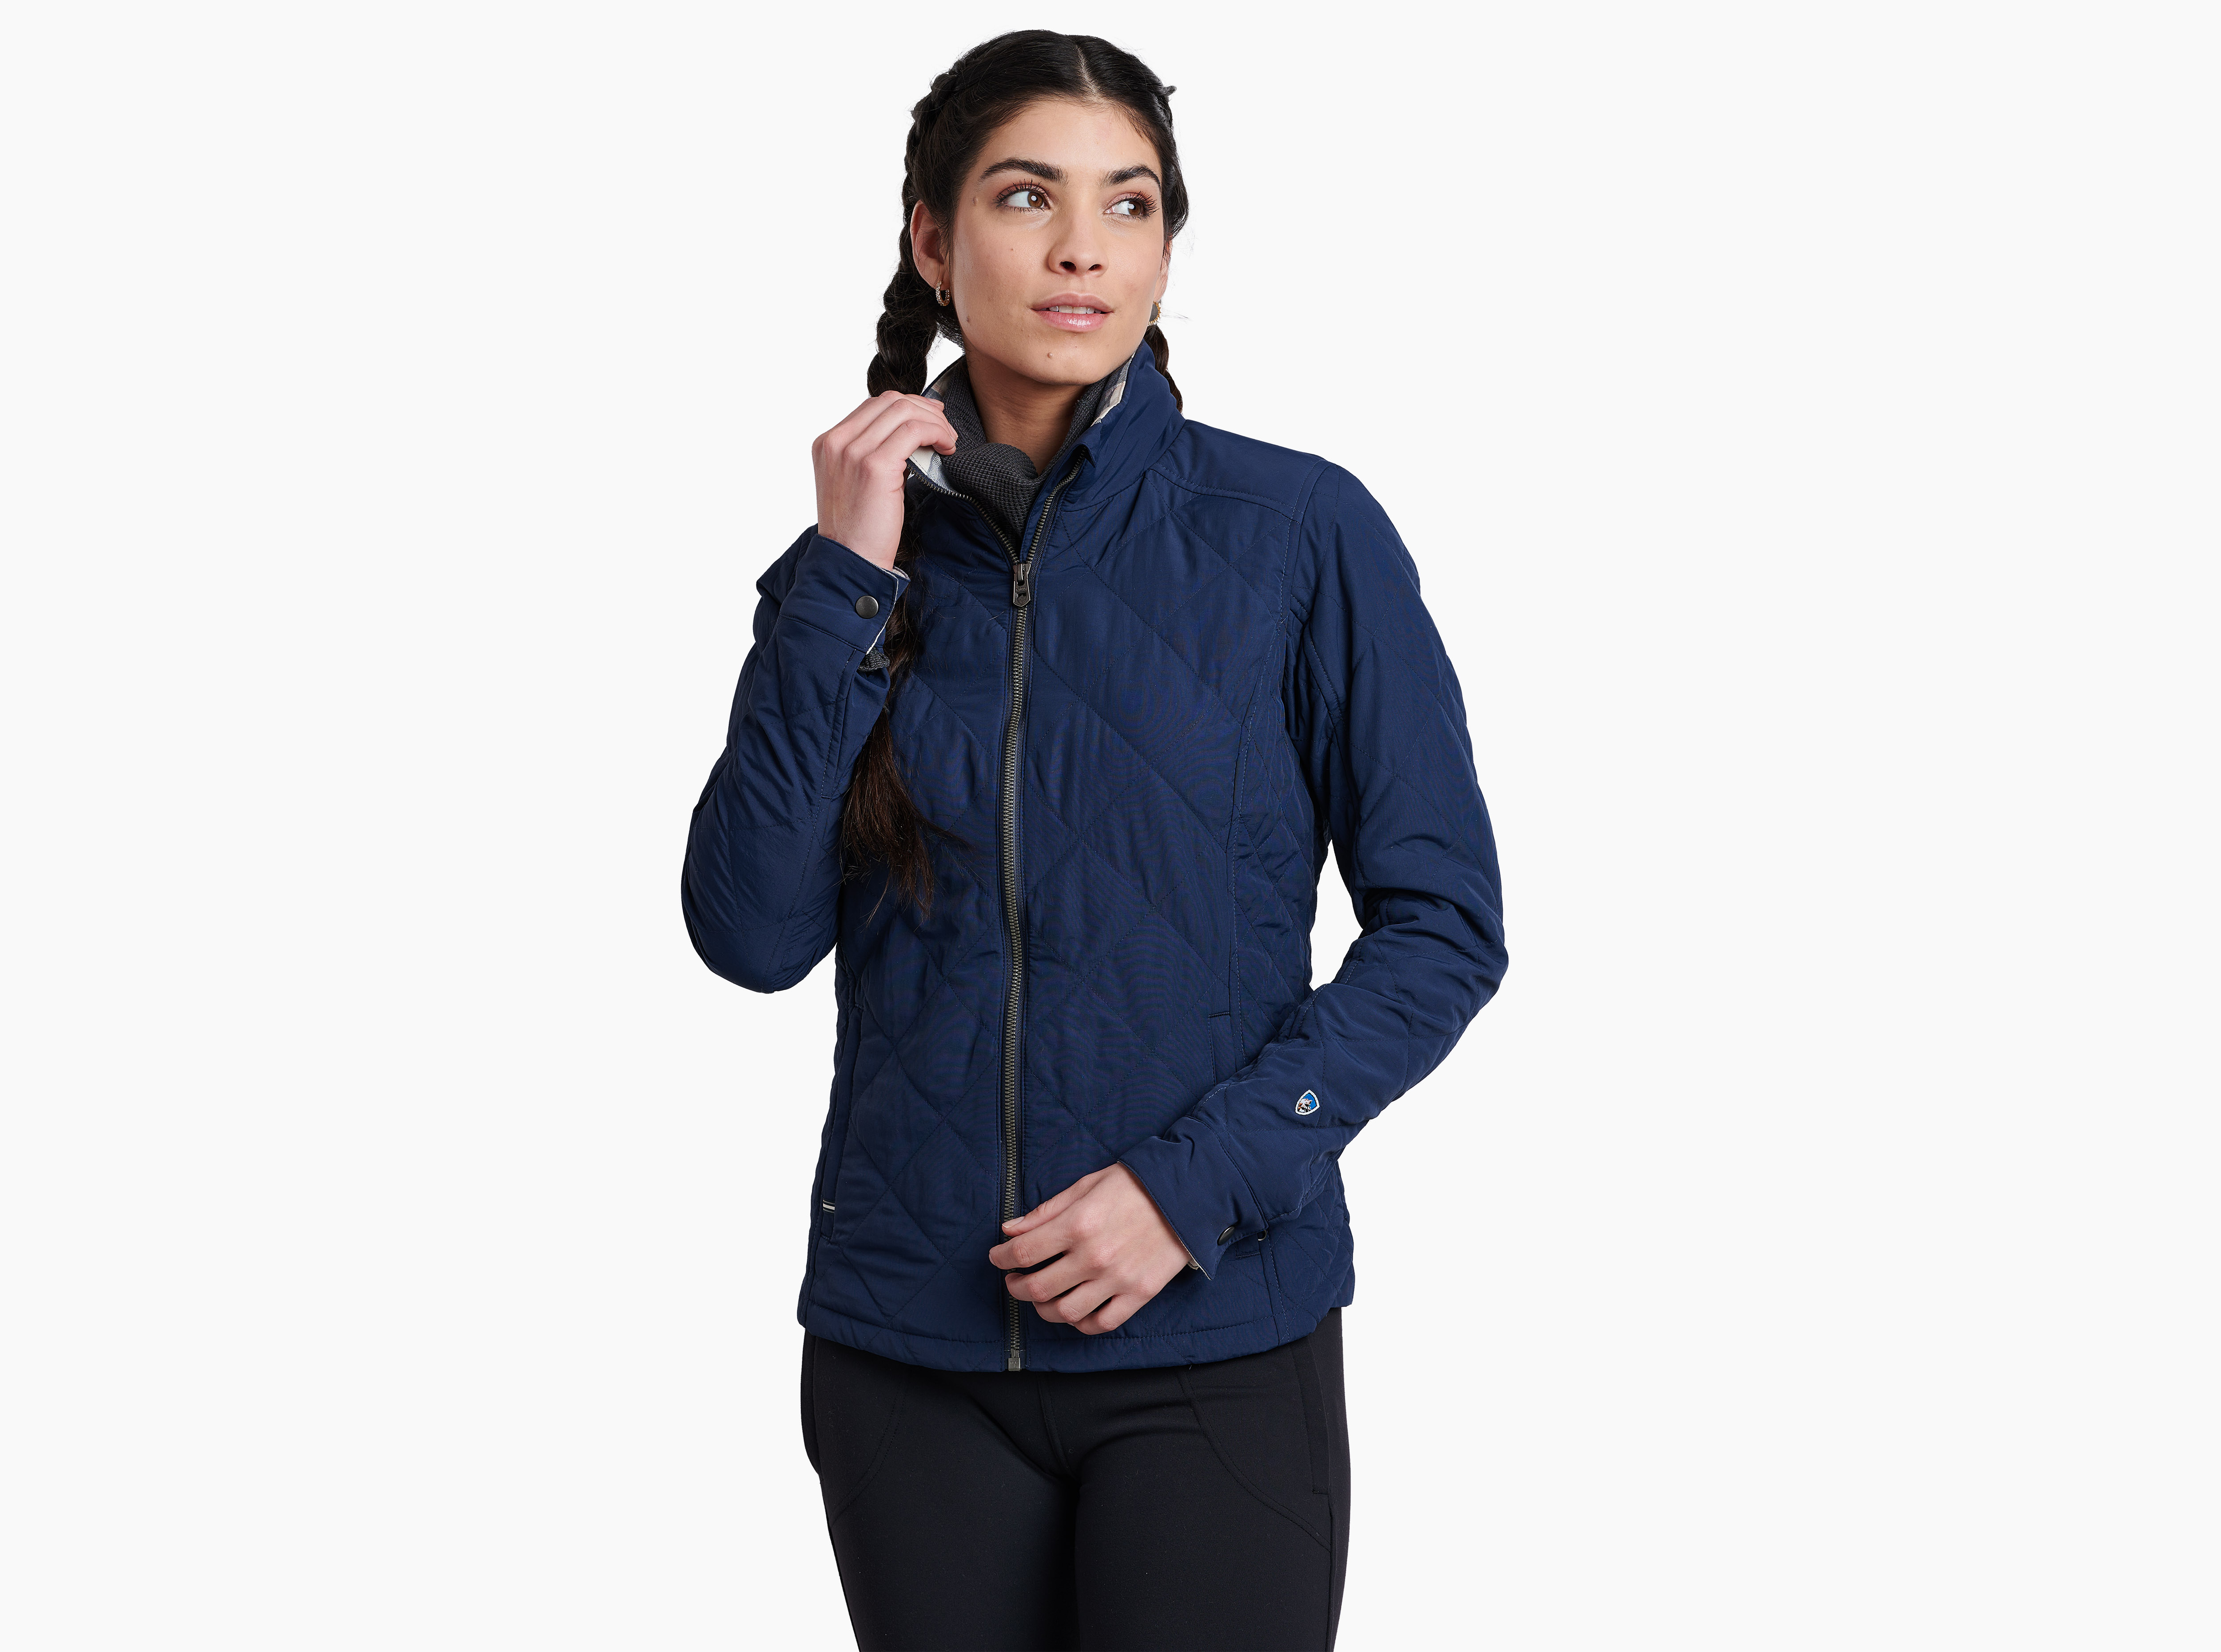 Kuhl Women's Lena Insulated Jacket- Midnight Sky- size S (HOT SALE!!!)